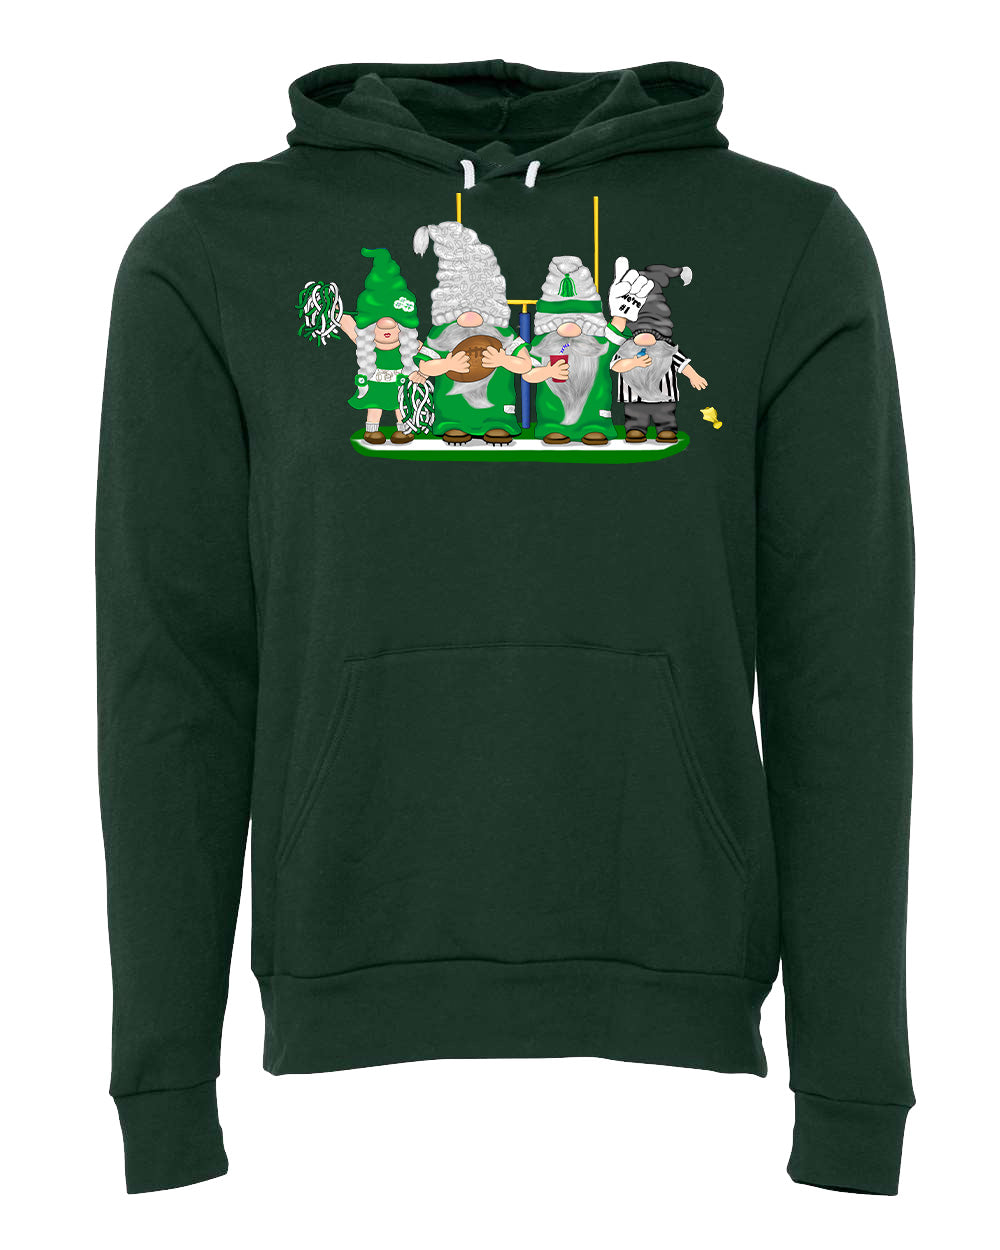 Green & White Football Gnomes (similar to NY) on Unisex Hoodie